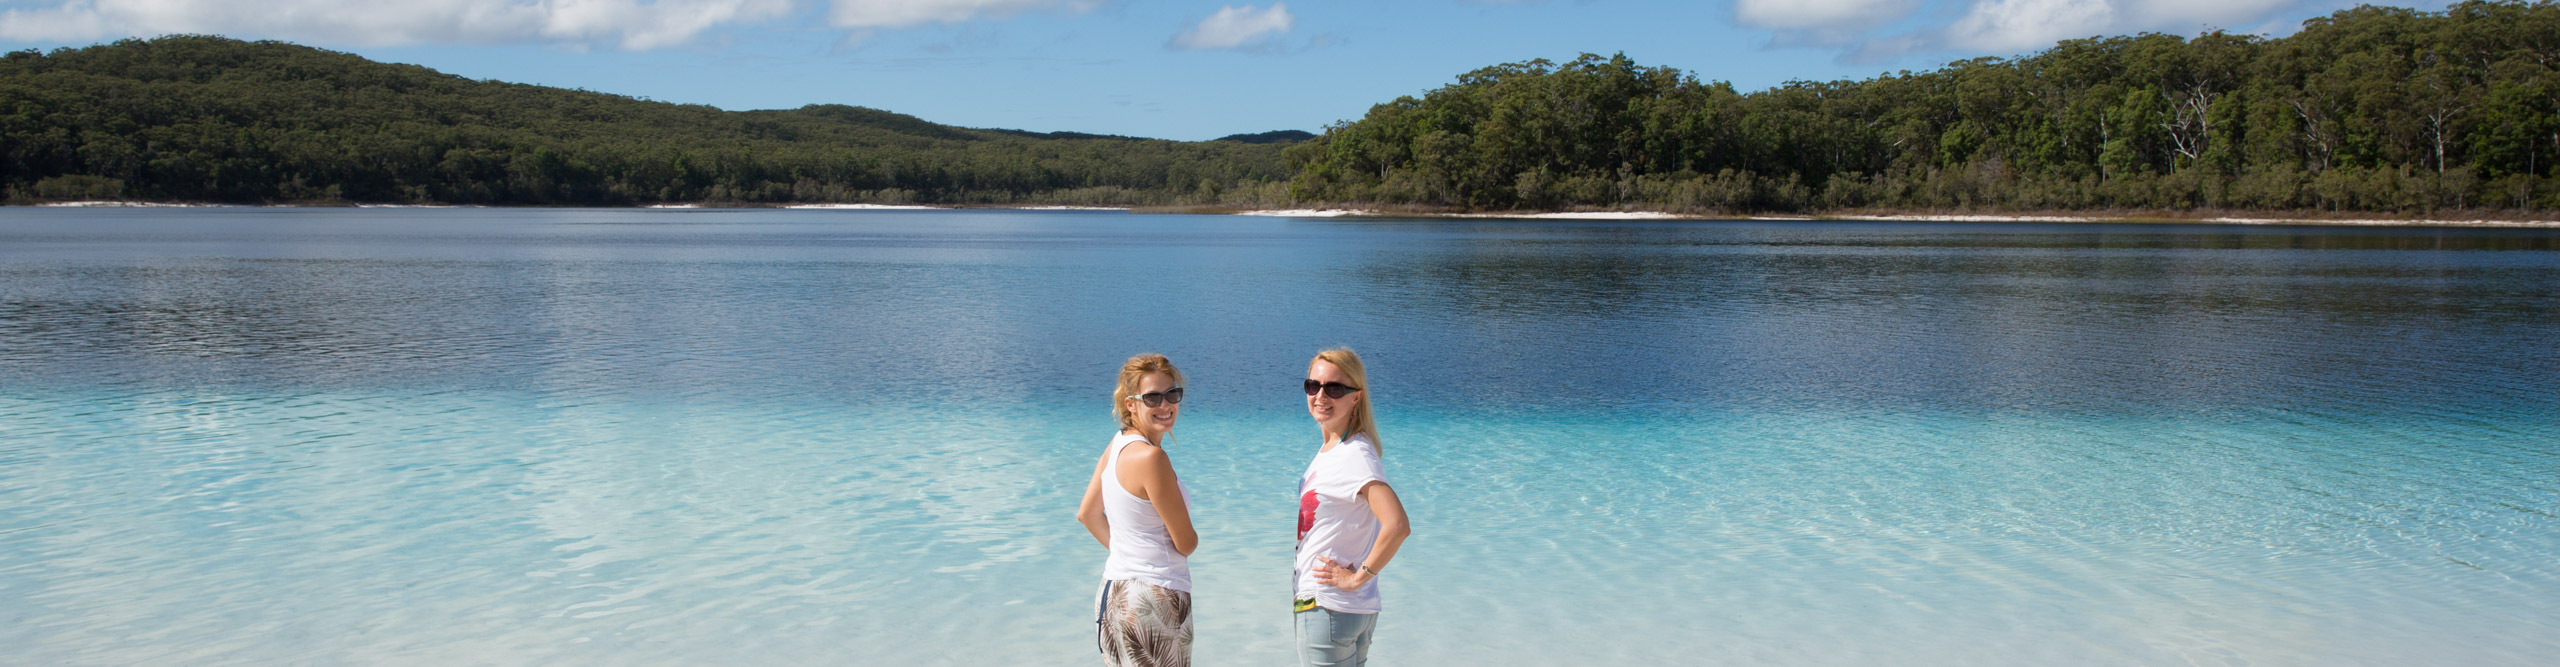 Travellers at a beach on Fraser Island, Queensland, Australia 